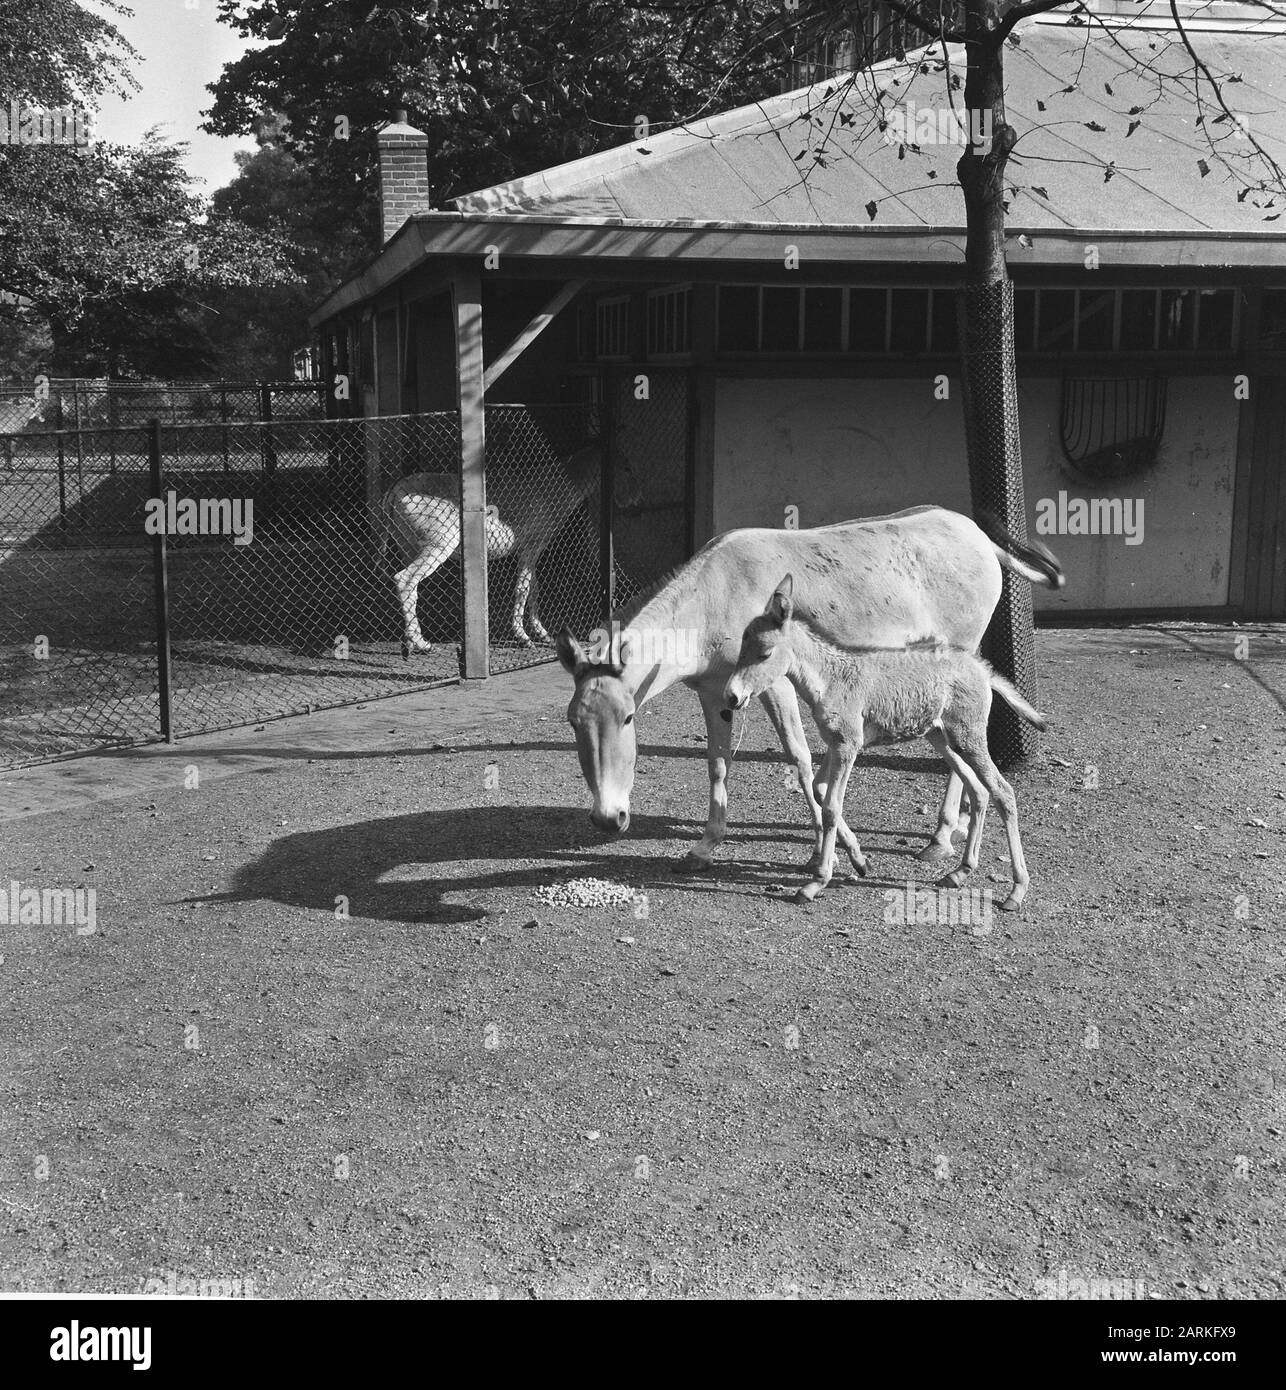 Half donkey (Onager) in Artis Date: September 20, 1965 Institution name: Artis Stock Photo